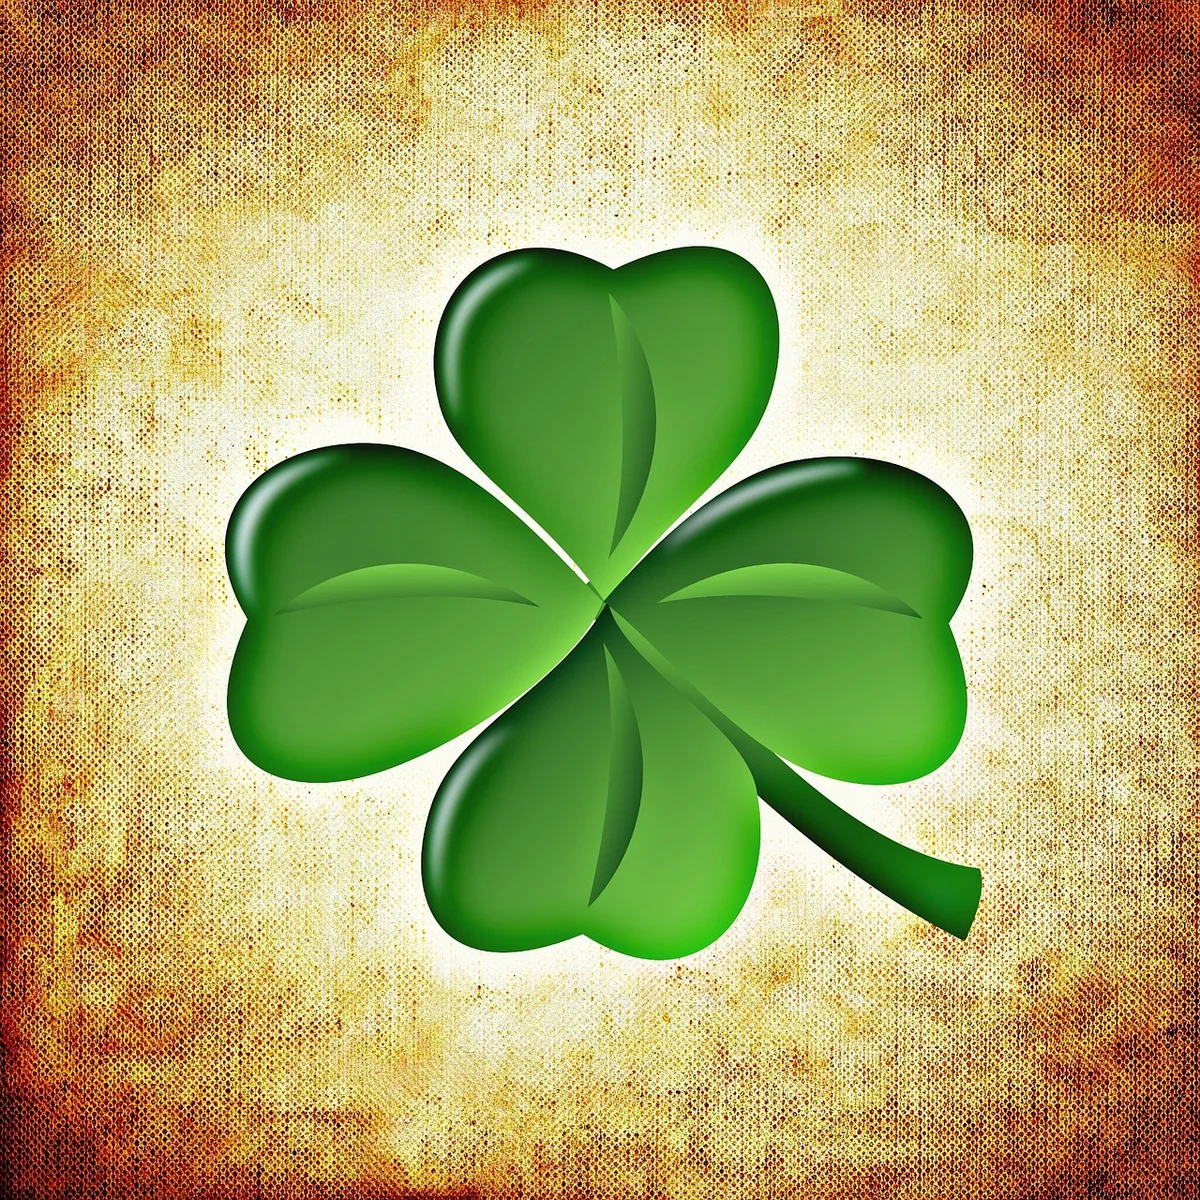 Картинка на 4 листа. Ирландский Клевер четырехлистный. Четырехлистный Клевер (Шемрок). Коевер четырёх листник. Четырёхлистный Клевер символ удачи.